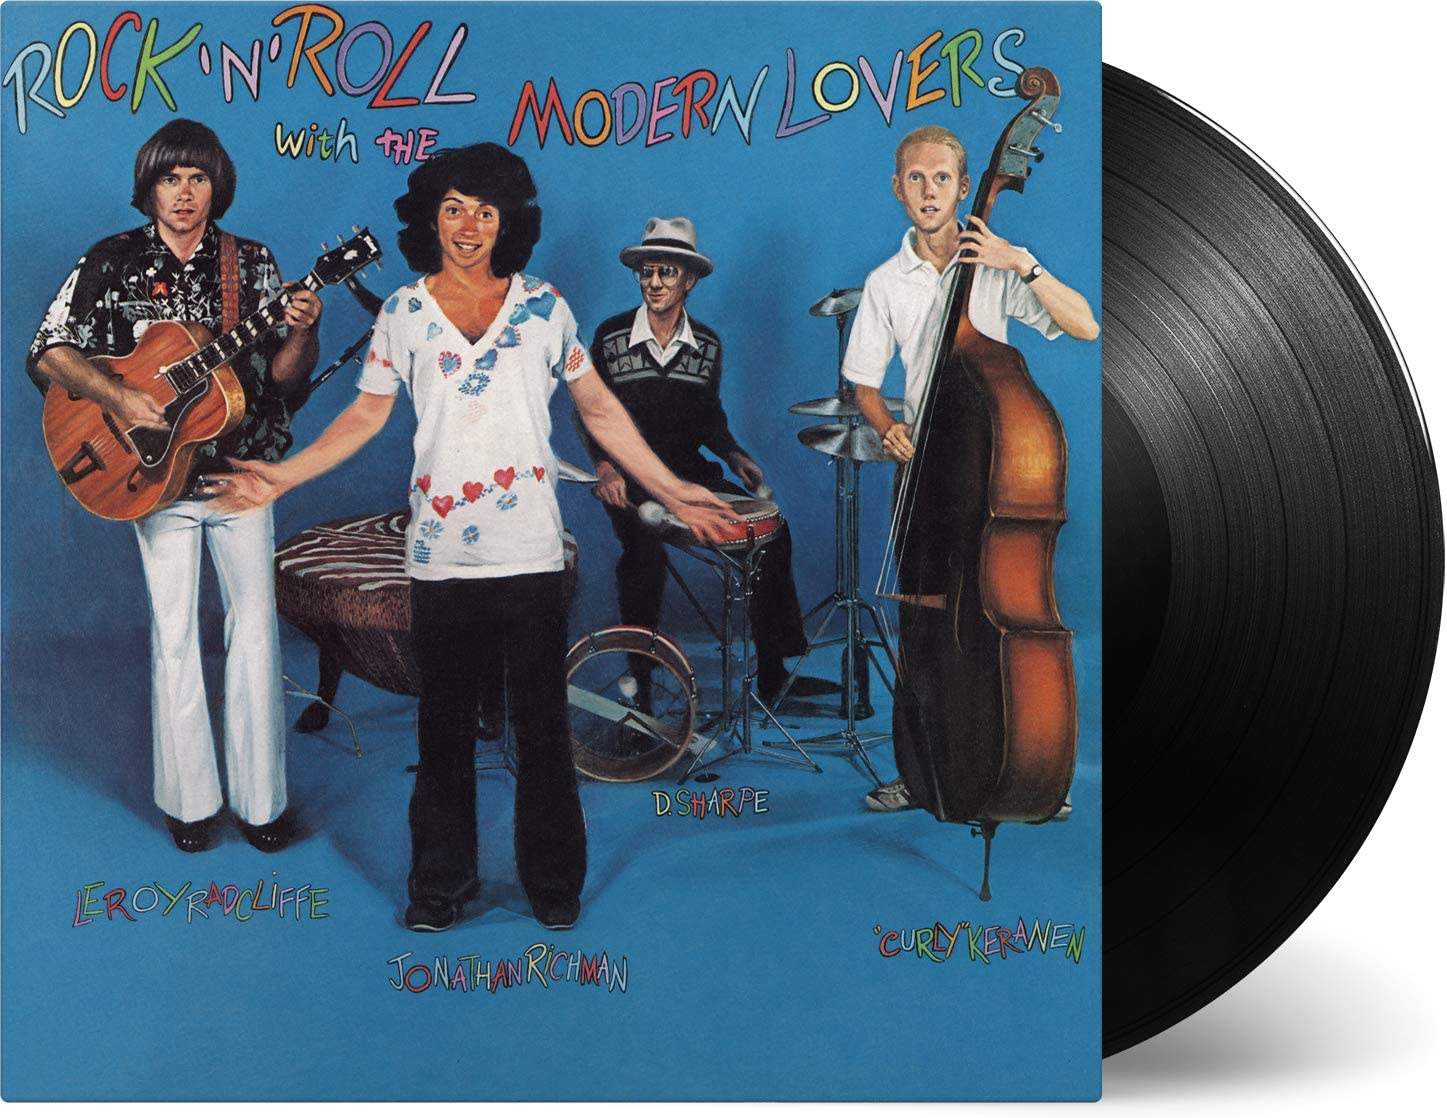 JONATHAN RICHMAN & THE MODERN LOVERS - Rock ‘n’ Roll With The Modern Lovers - LP - Vinyl